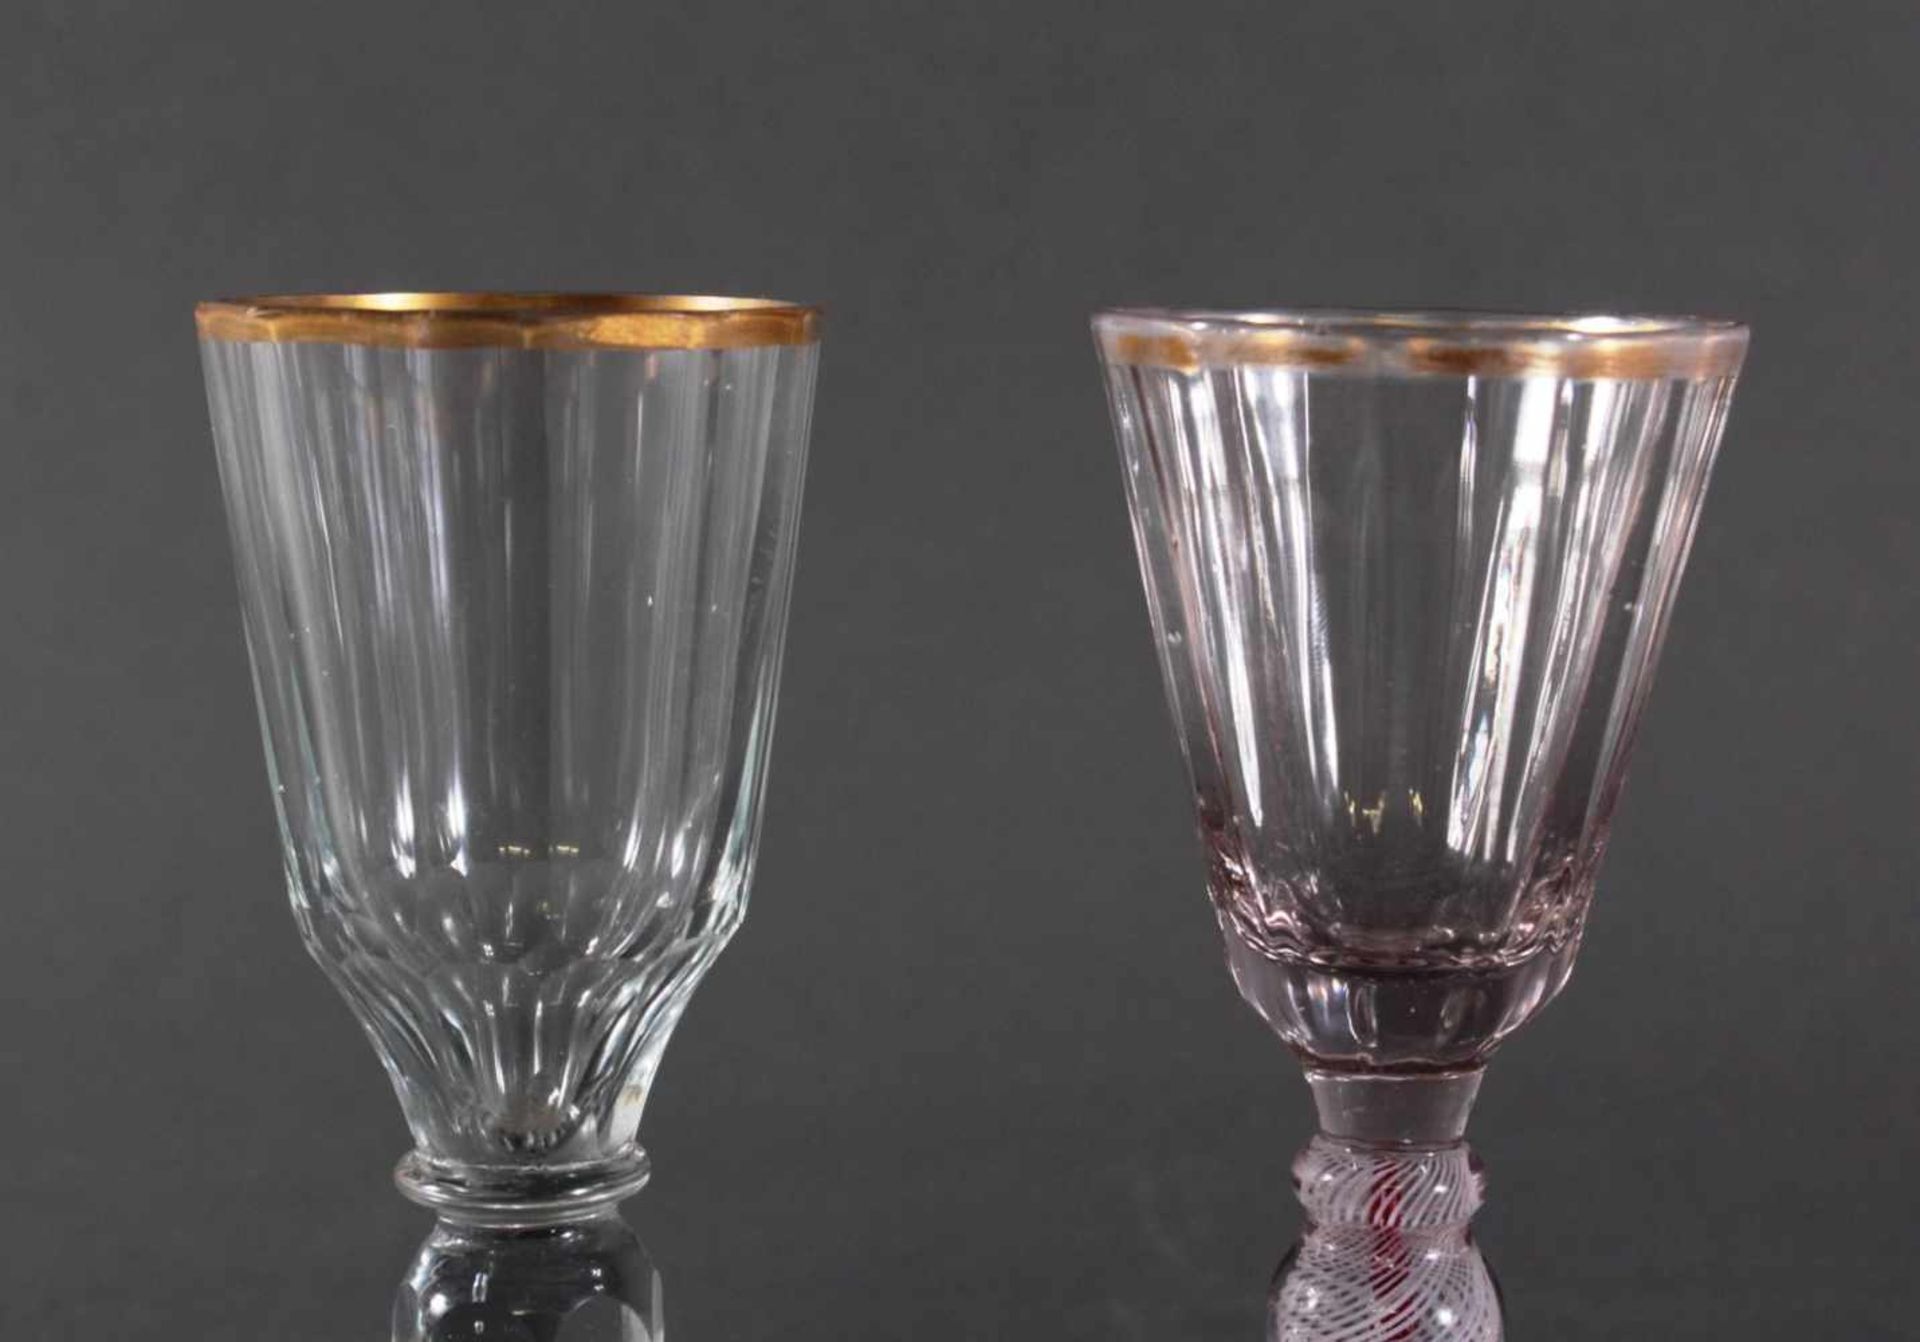 Barock-Gläser, 18. Jh.Farbloses Glas, facettierte Kuppa, Goldrand (Abrieb), Schaft mit Kugelnodus. - Image 2 of 4